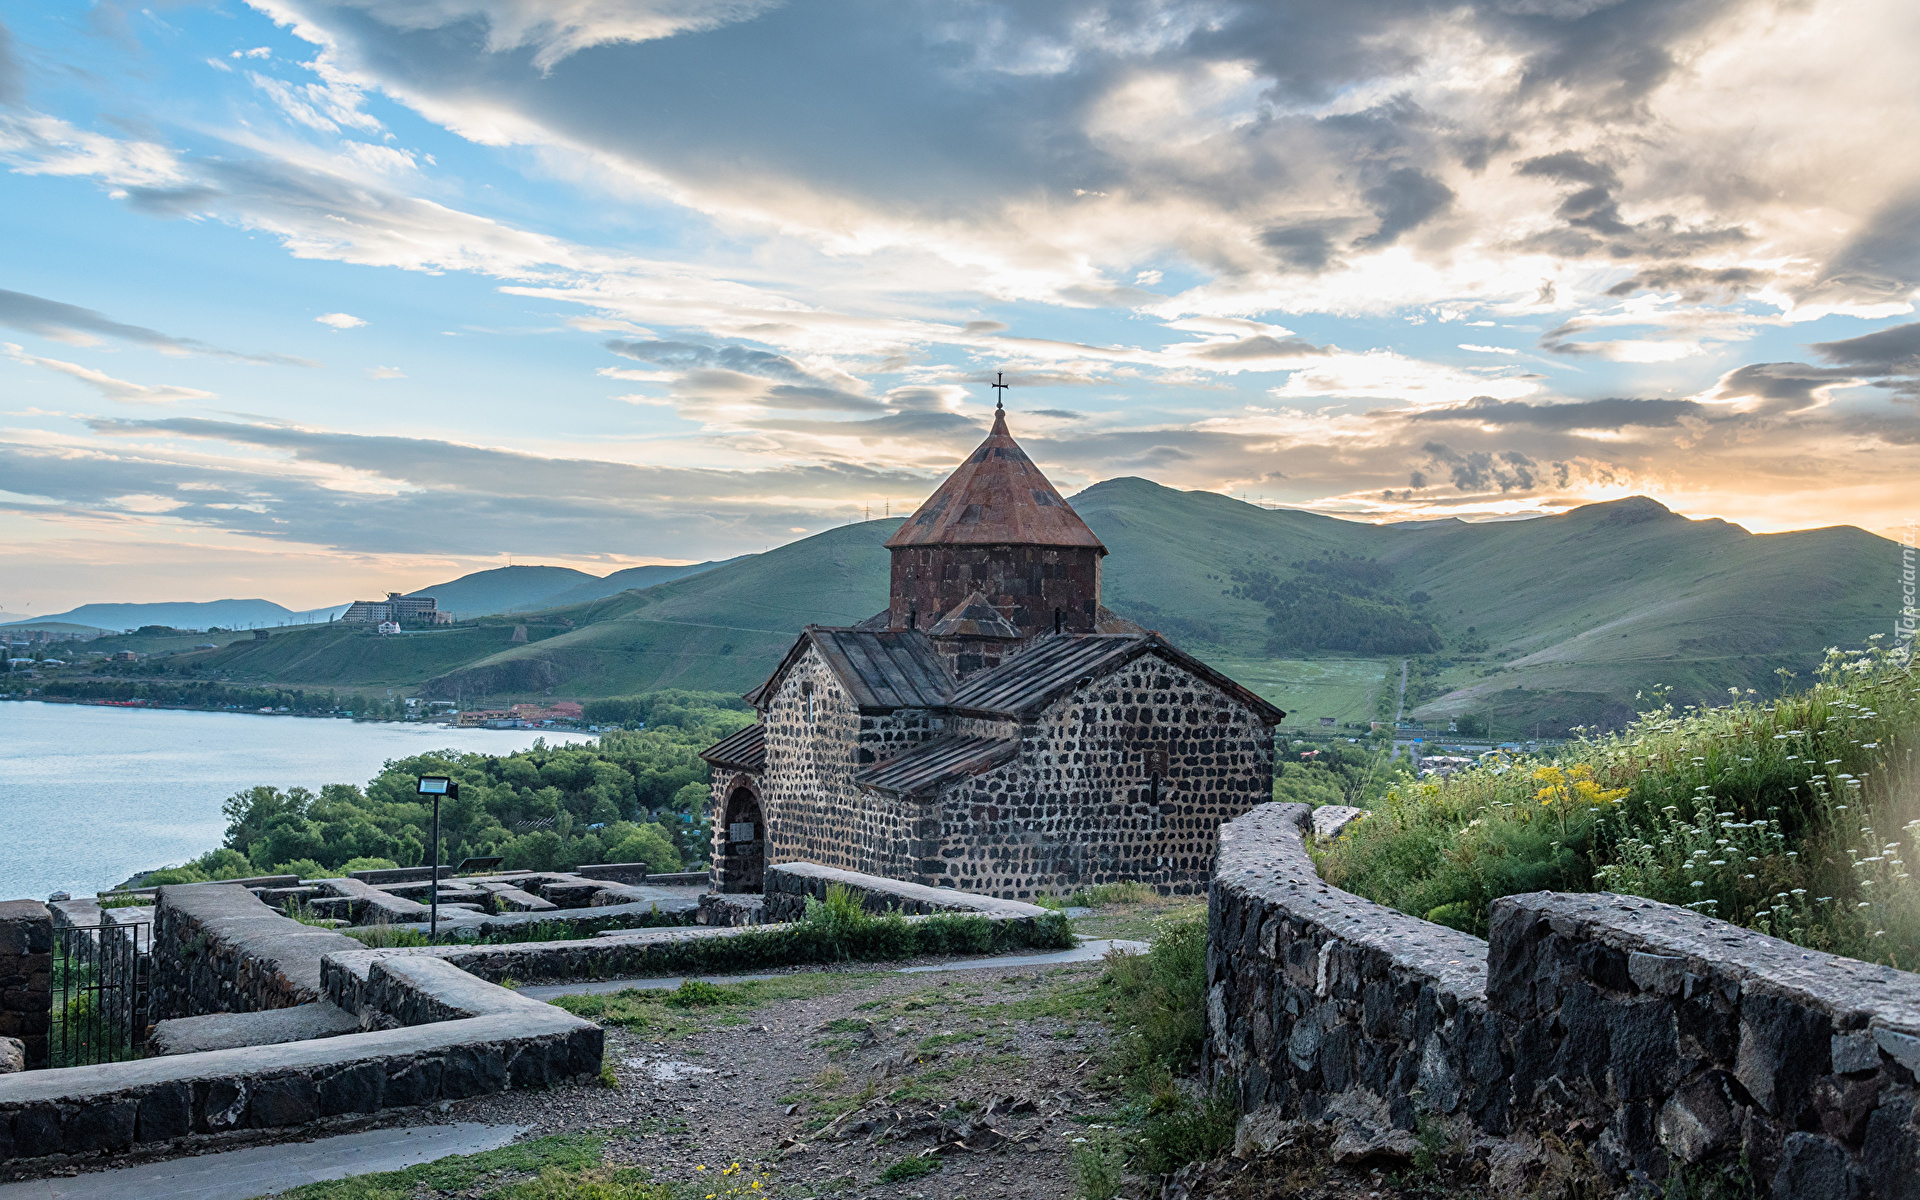 Armenia, Sewan, Kościół, Klasztor Sewanawank, Góry, Niebo, Chmury, Mur